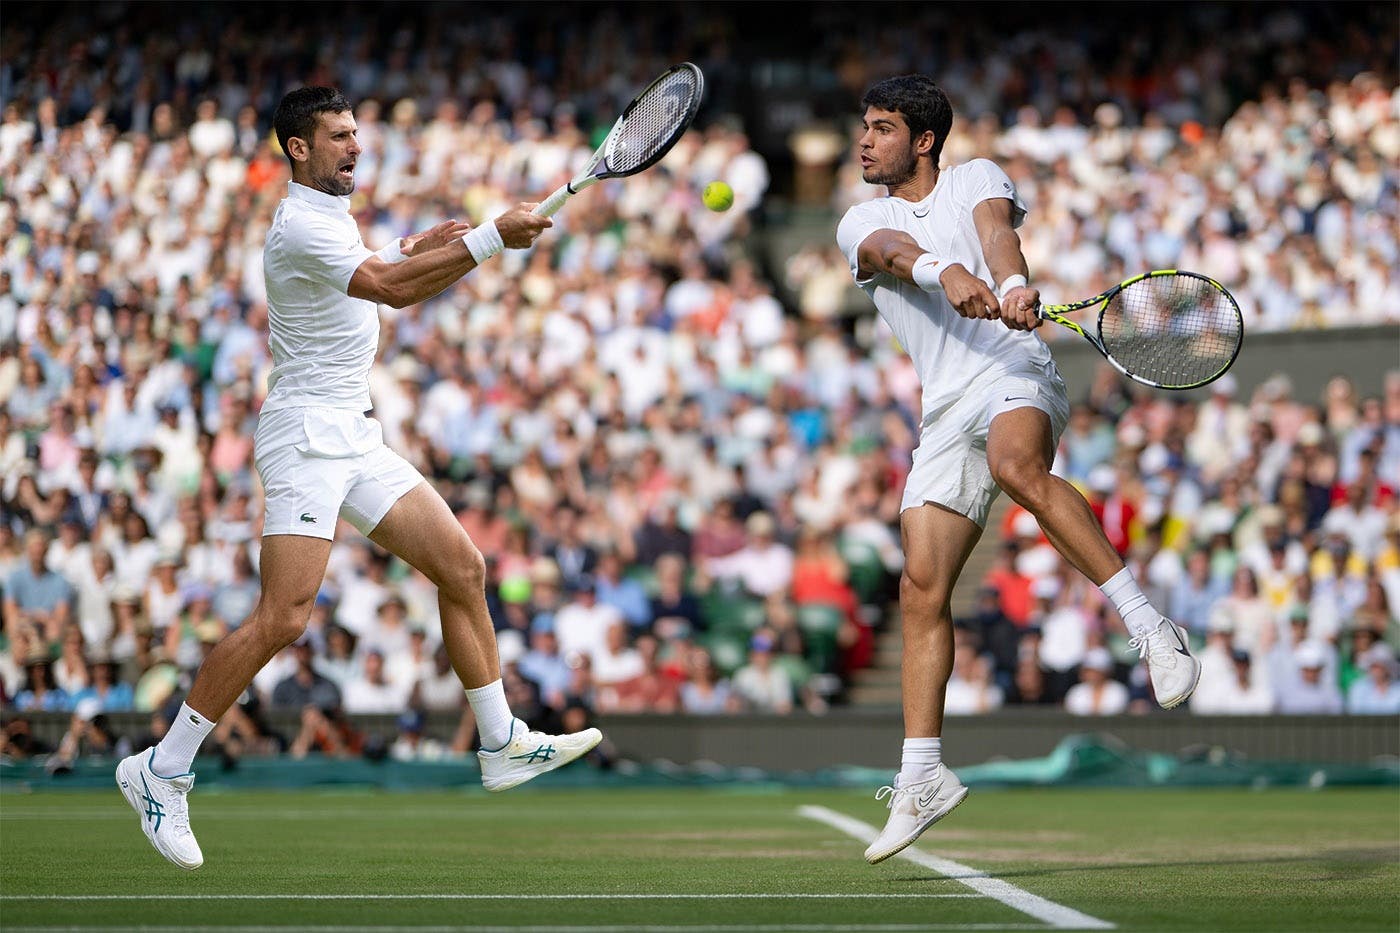 [AO VIVO] Alcaraz x Djokovic na final de Wimbledon em tempo real